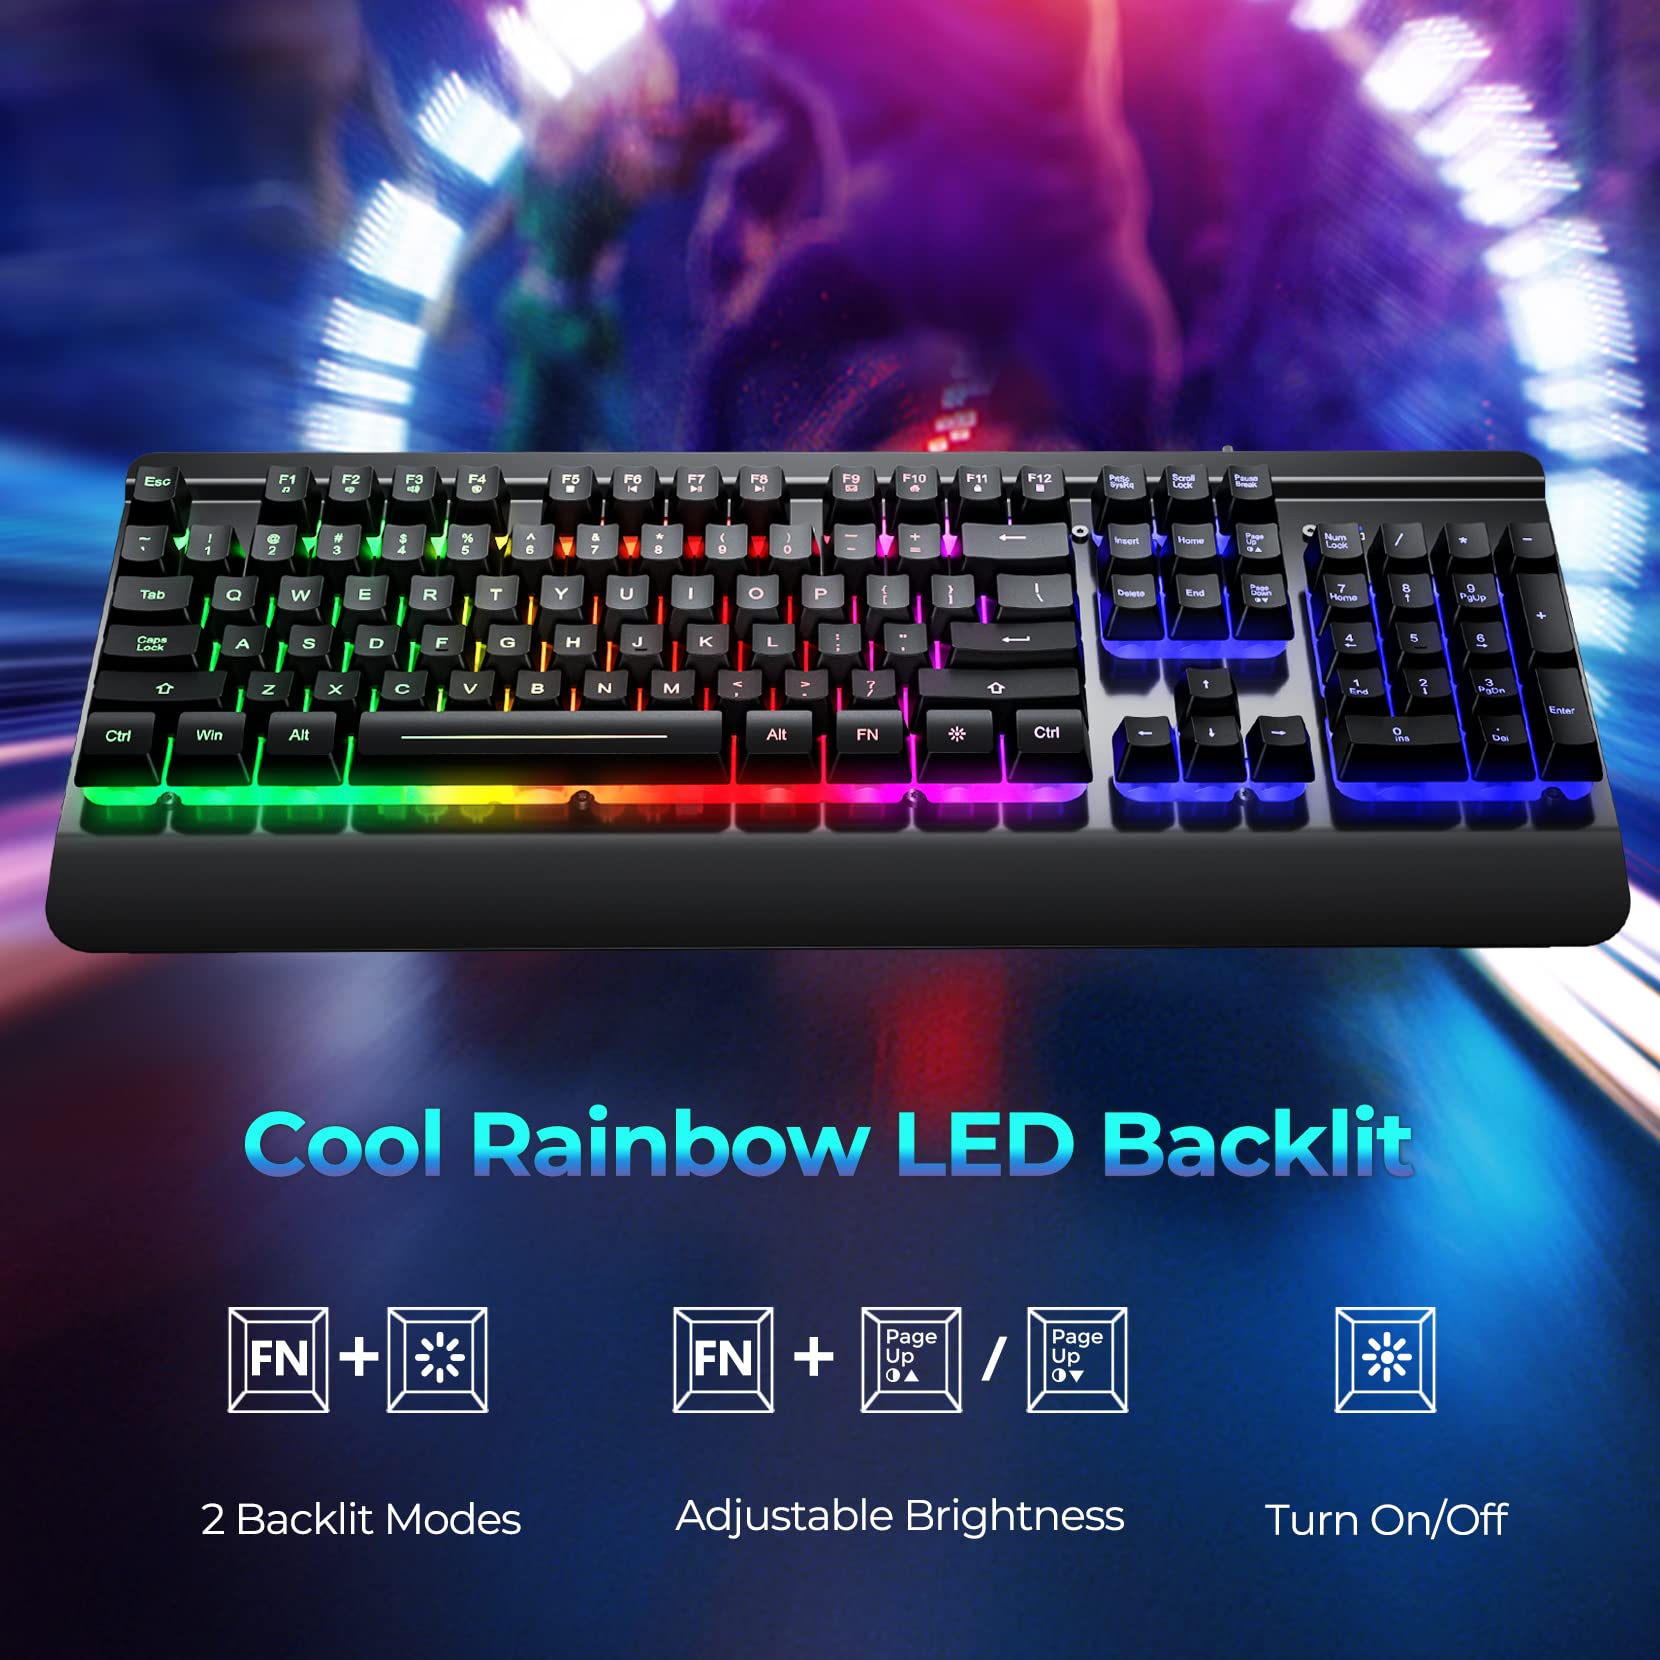 Pauroty Gaming Keyboard Metal, Rainbow LED Backlit Silent Keyboard with Wrist Rest, 104 Quiet Membrane Keys, Multimedia Keys,19 Anti-ghosting Keys, Waterproof, USB Wired Keyboard for Windows PC Gamer